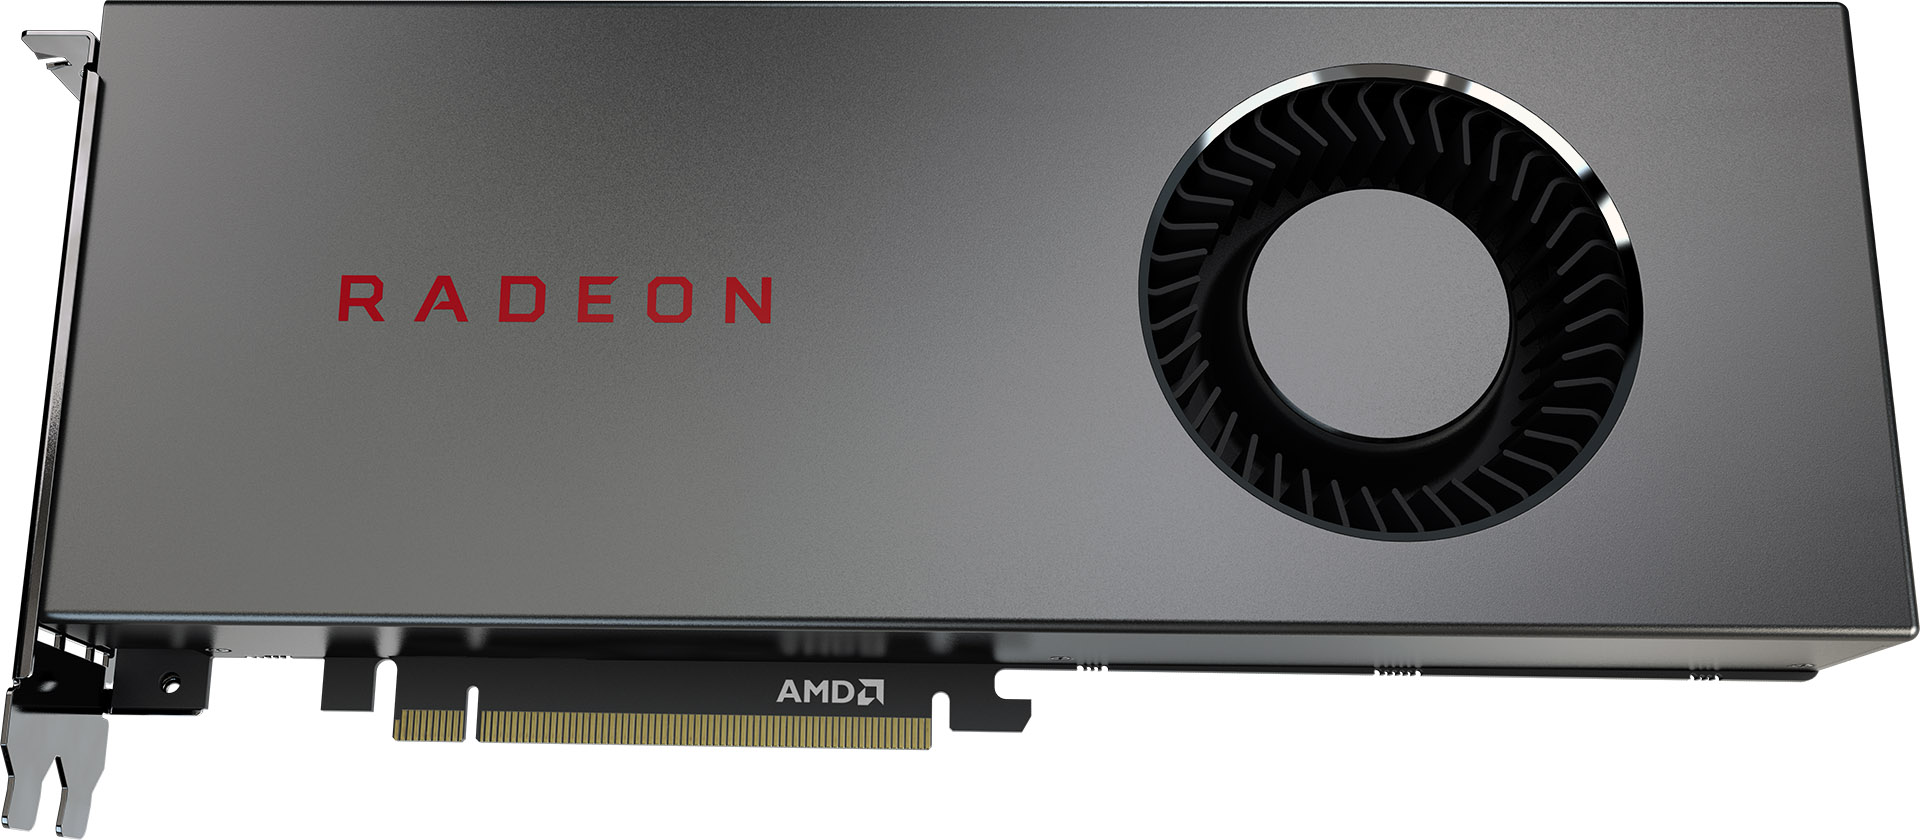 Radeon RX 5700 recenzija